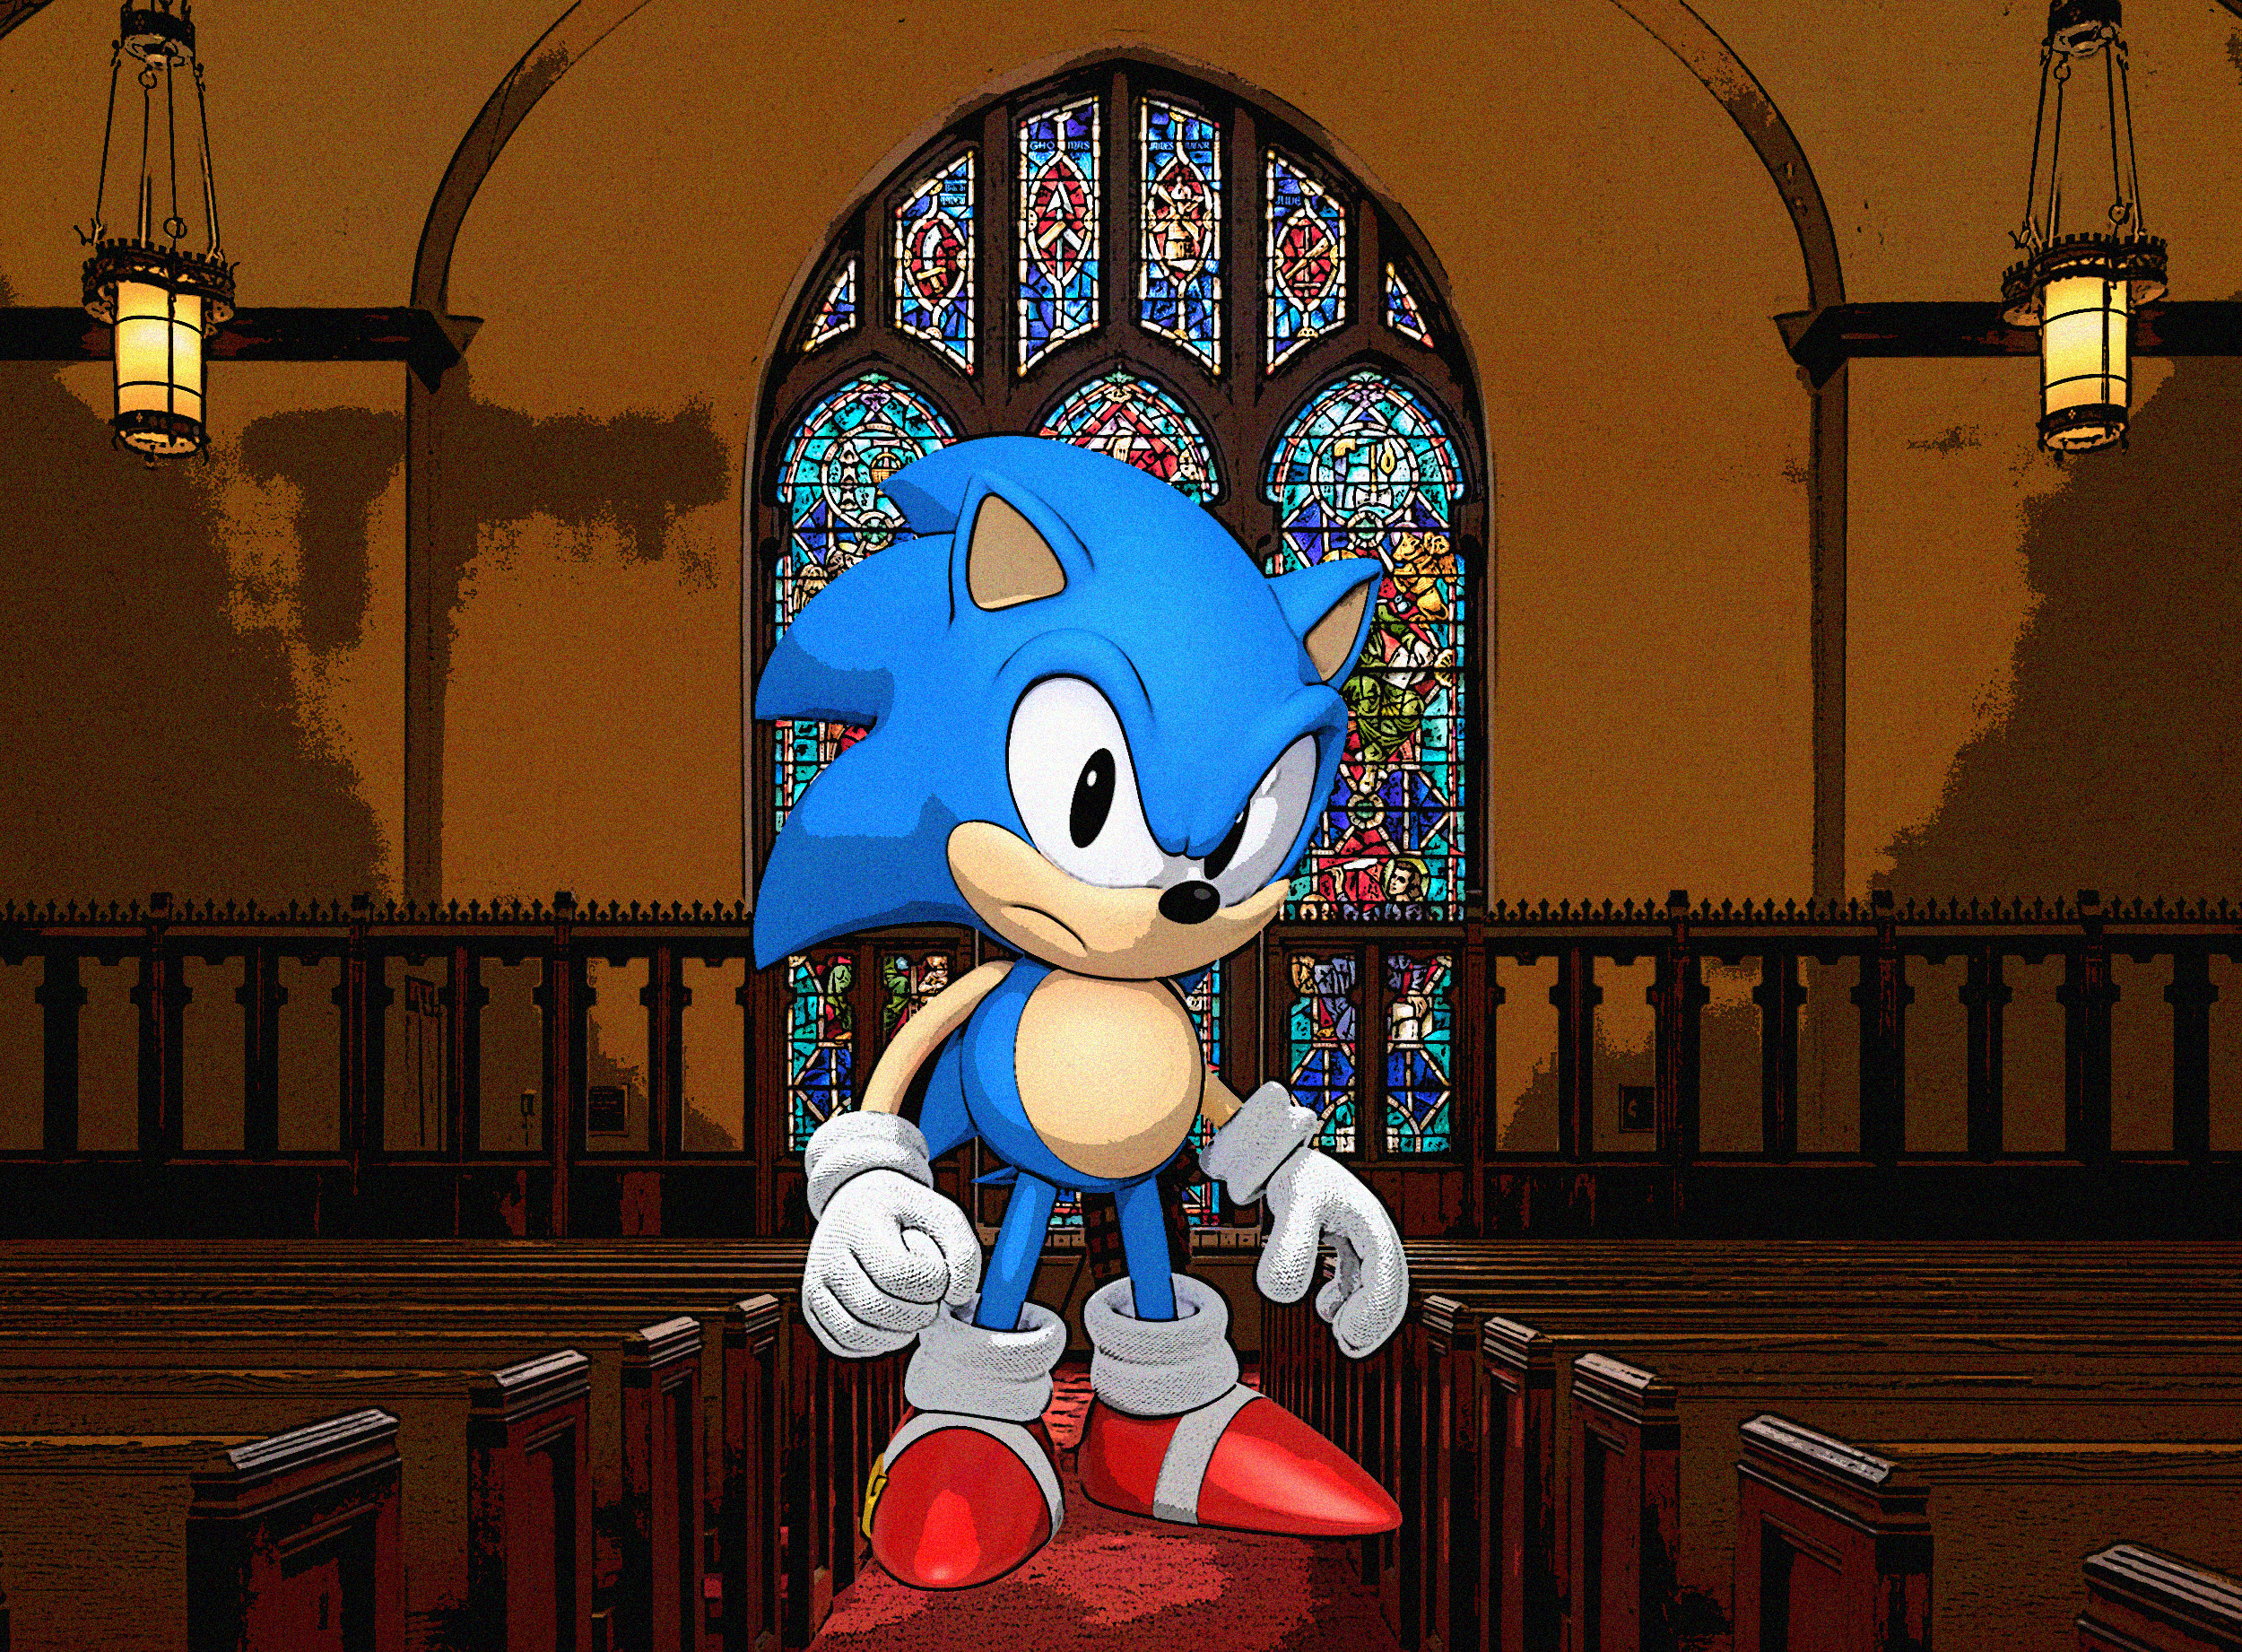 Sonic the Hedgehog Comic Cover Art 4 Wall Scroll